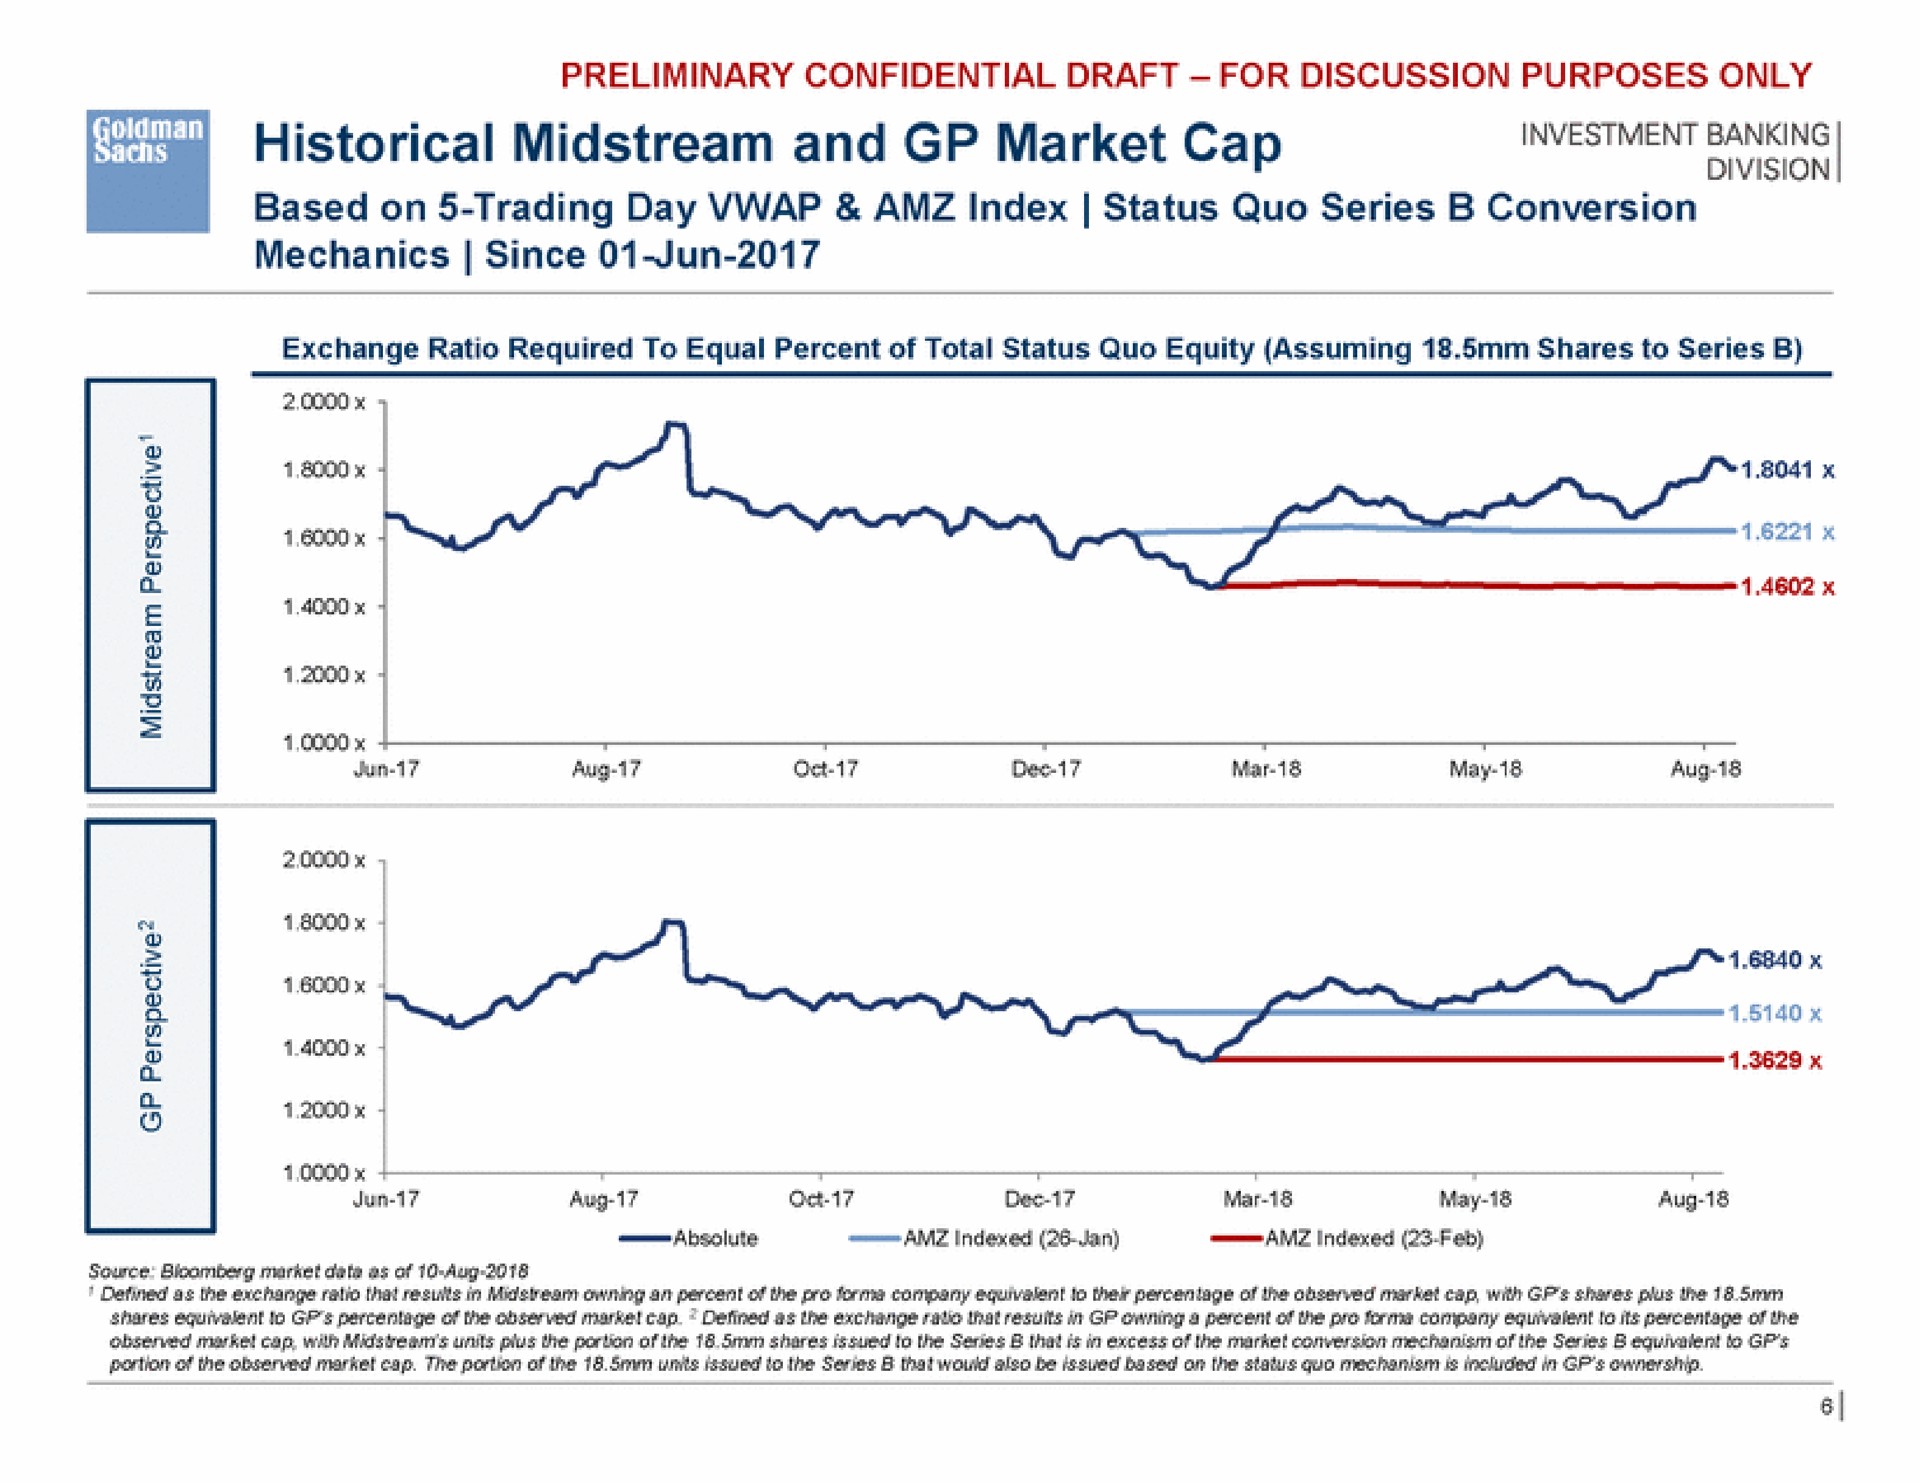 historical midstream and market cap | Goldman Sachs